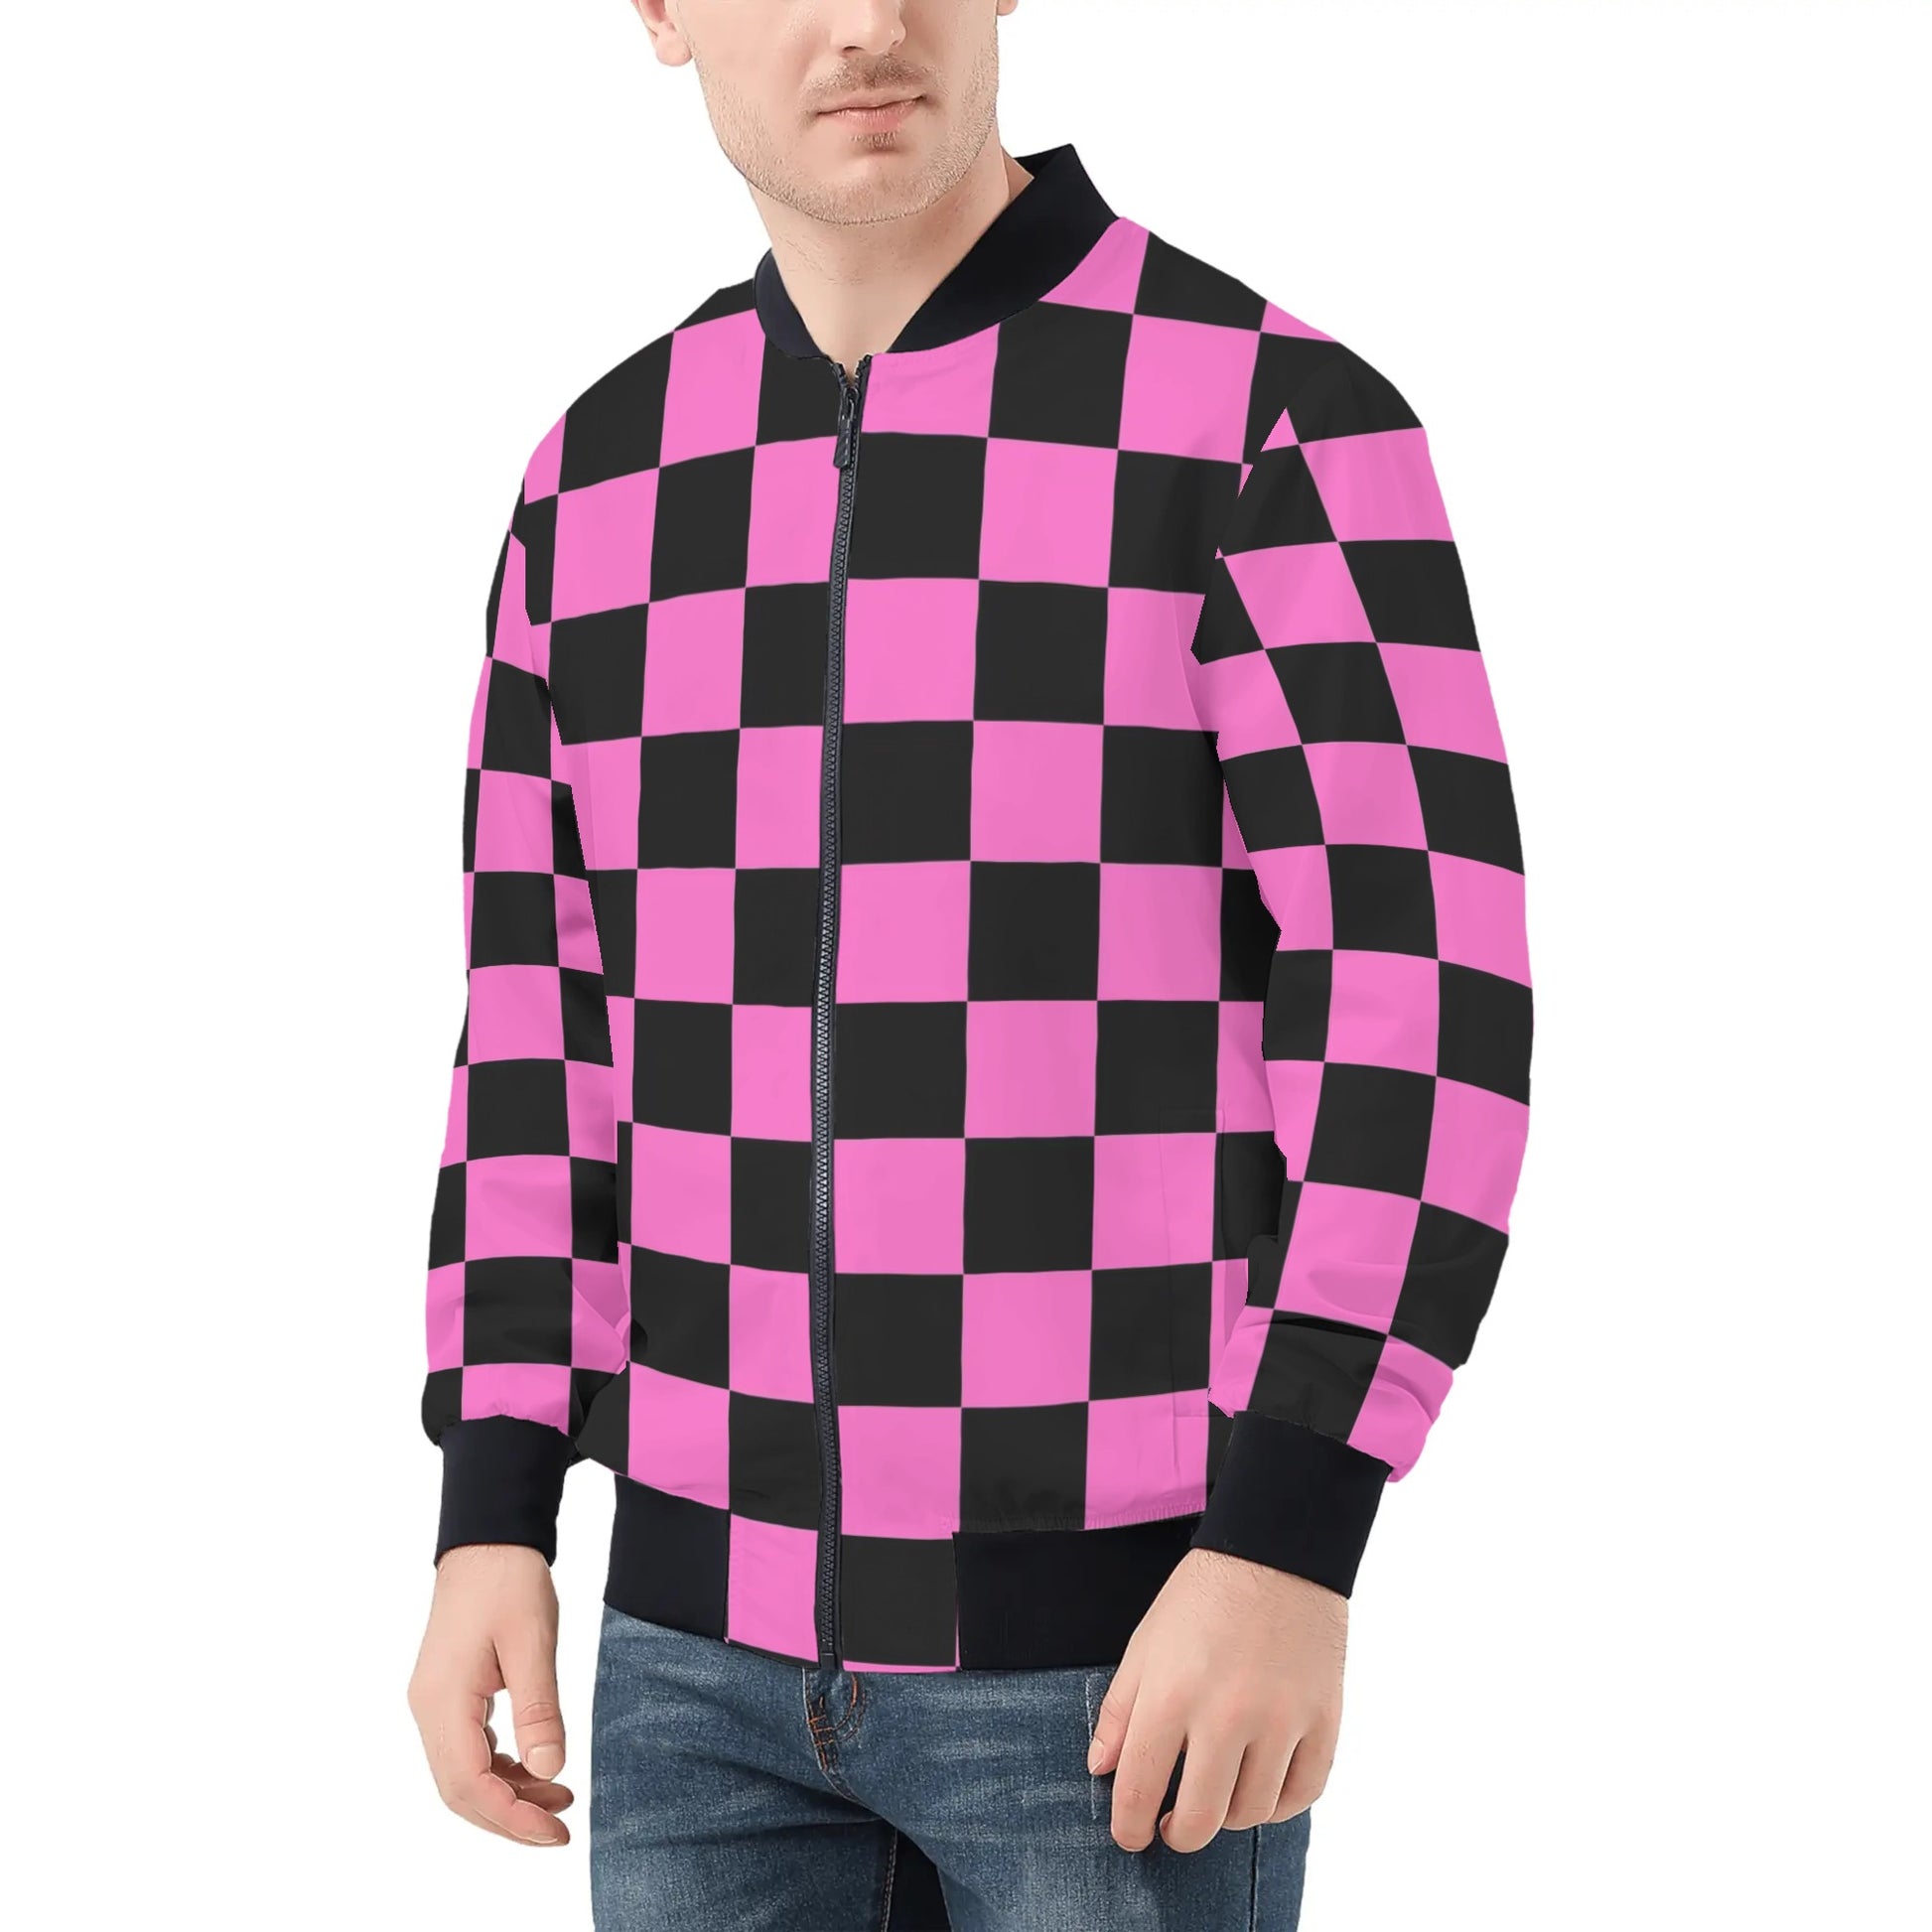 Black & Pink Bomber Jacket | Chessboard